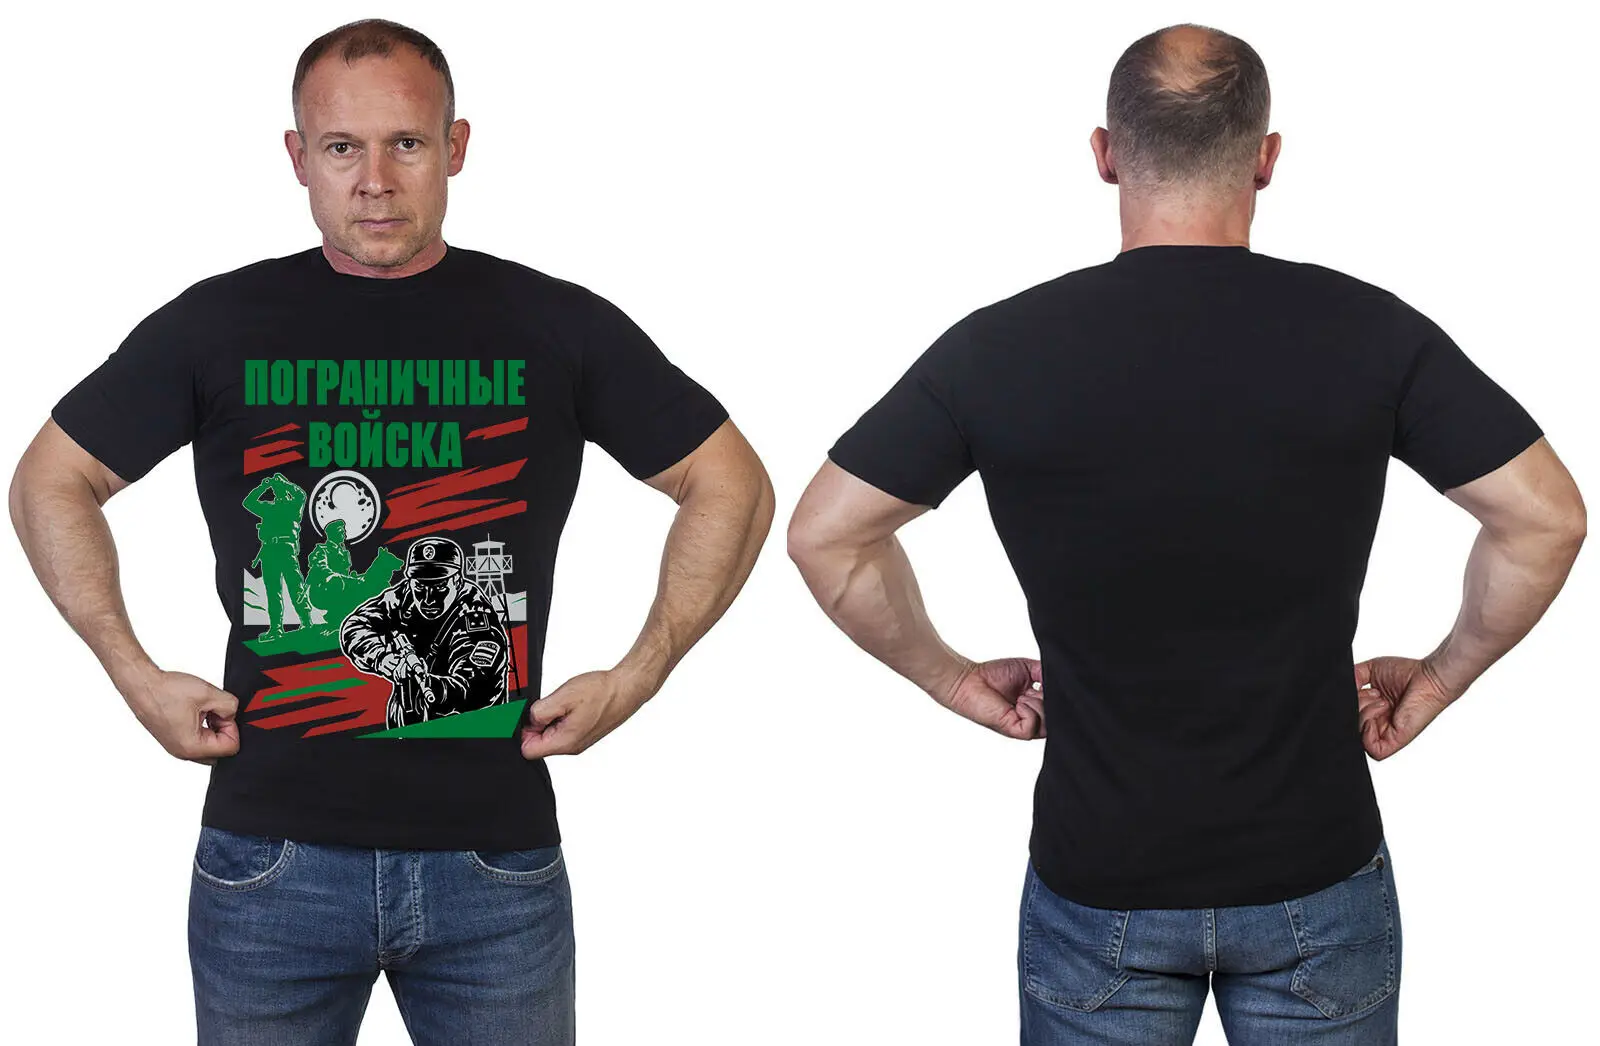 Novi Moški T-shirt Meji vojakov.Posebne sile, RUSIJA RUSKI TShirts